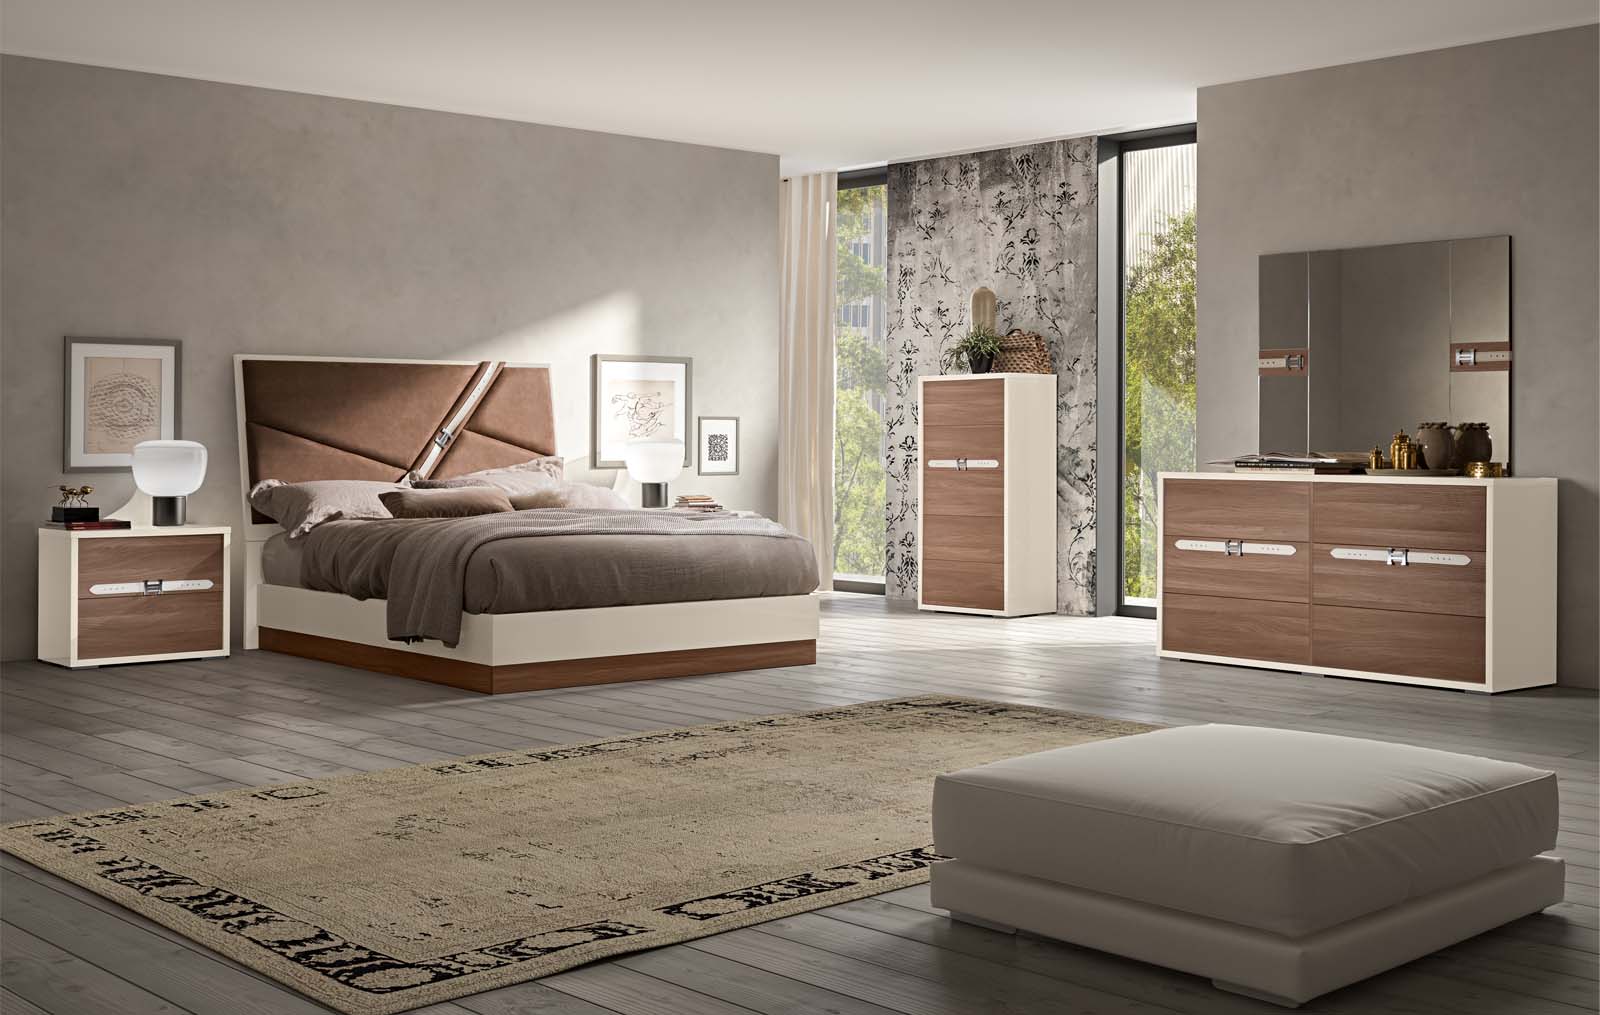 designer bedroom furniture perth